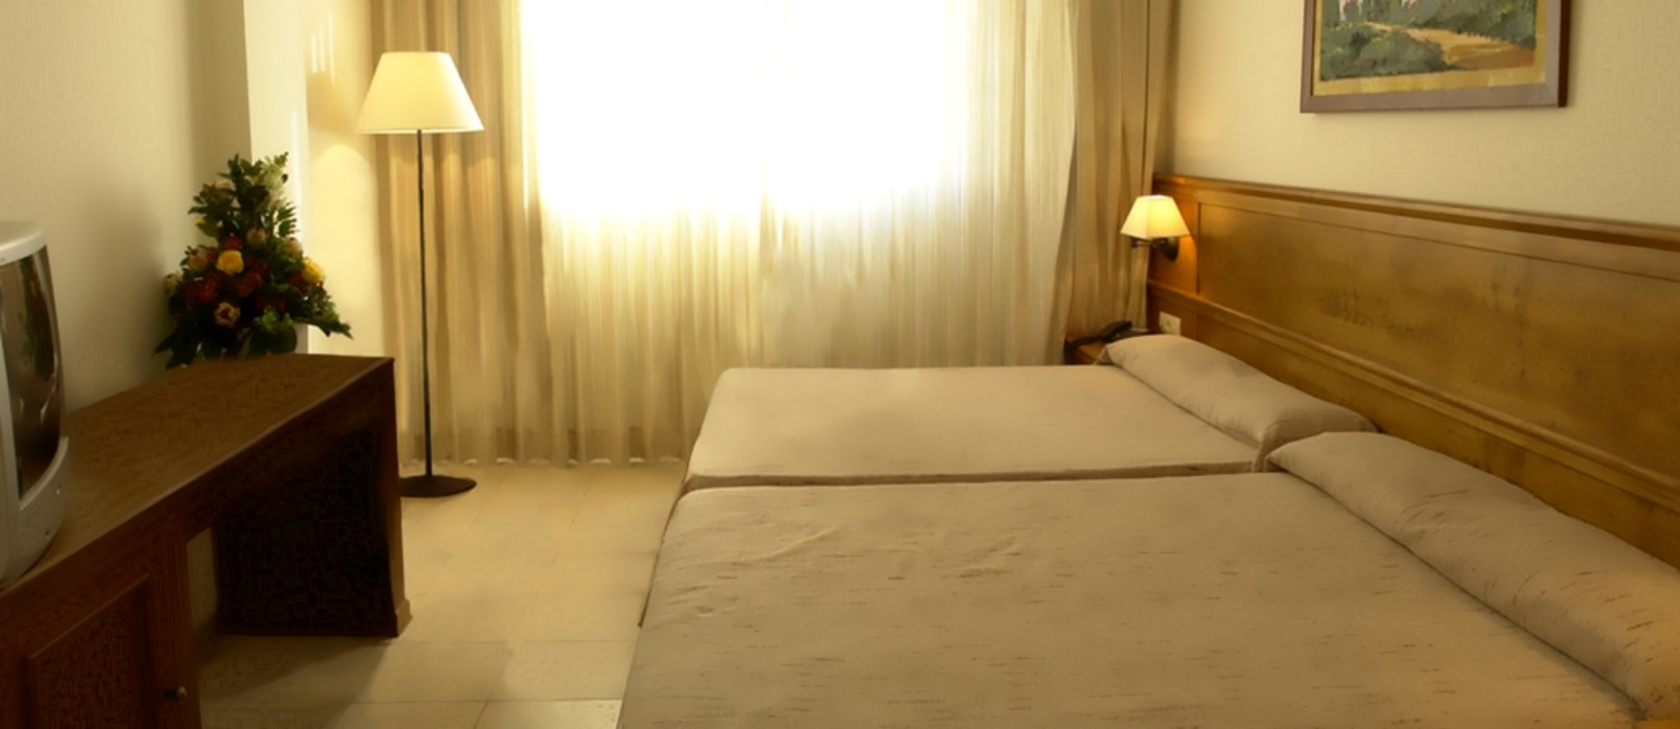 Oferta hotel con toboganes cerca del Cabo de Gata